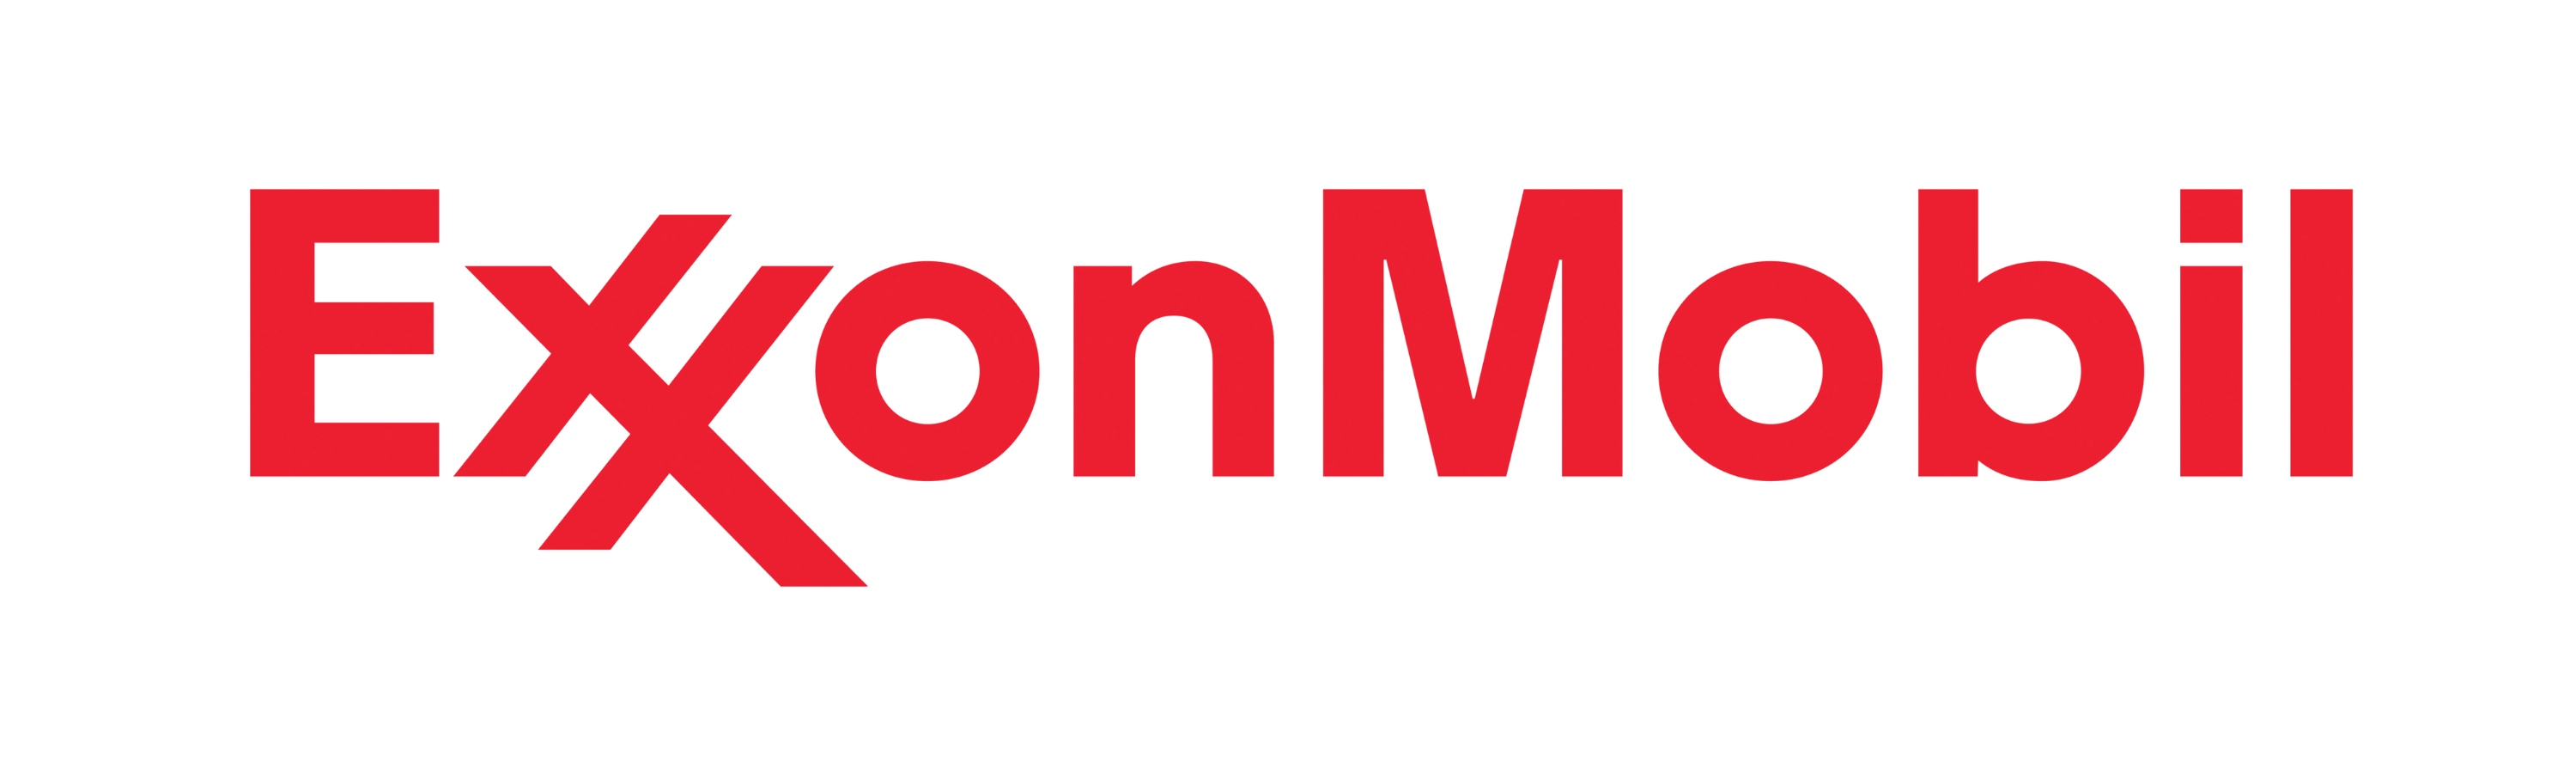 ExxonMobil-clear-back